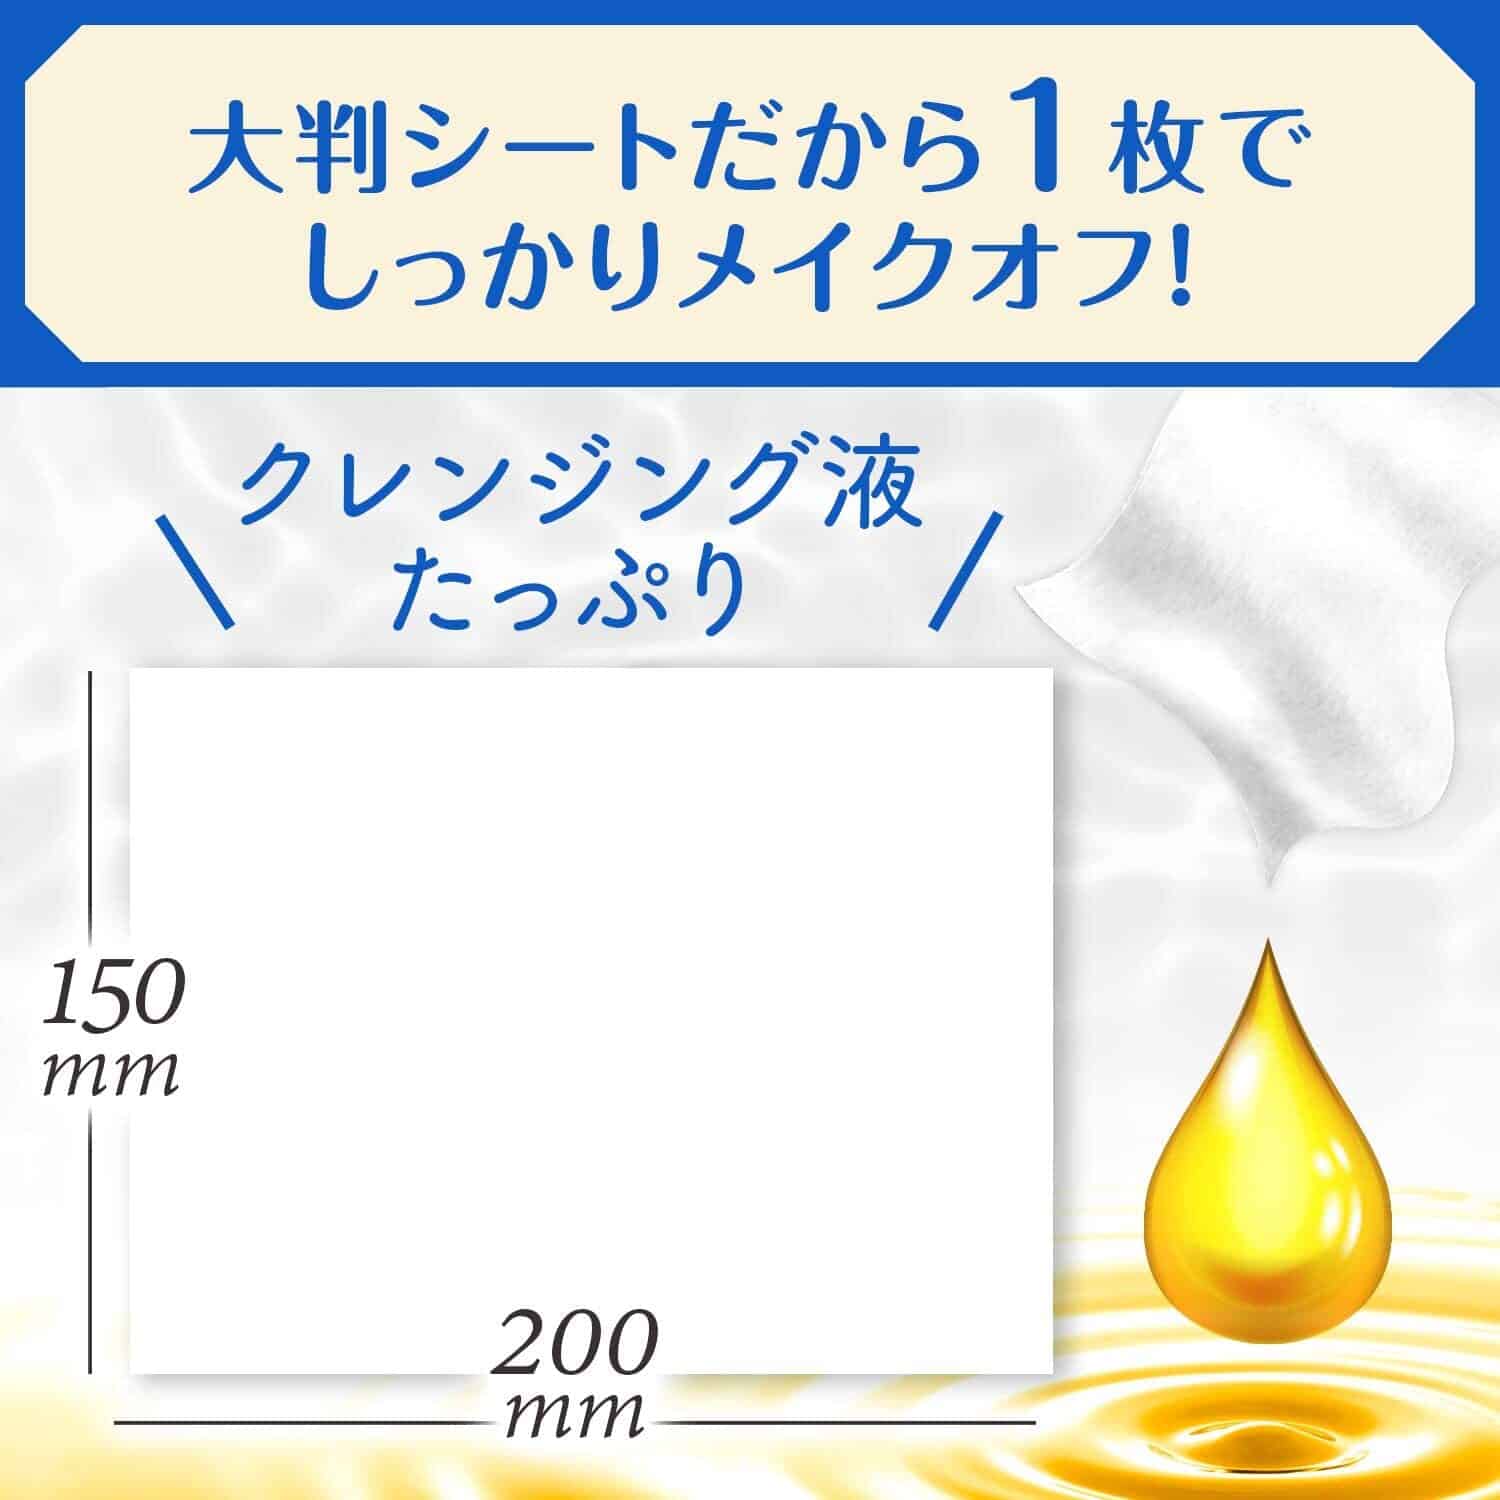 Mandom Bifesta Cleansing Sheet Oil-In 40 Sheets